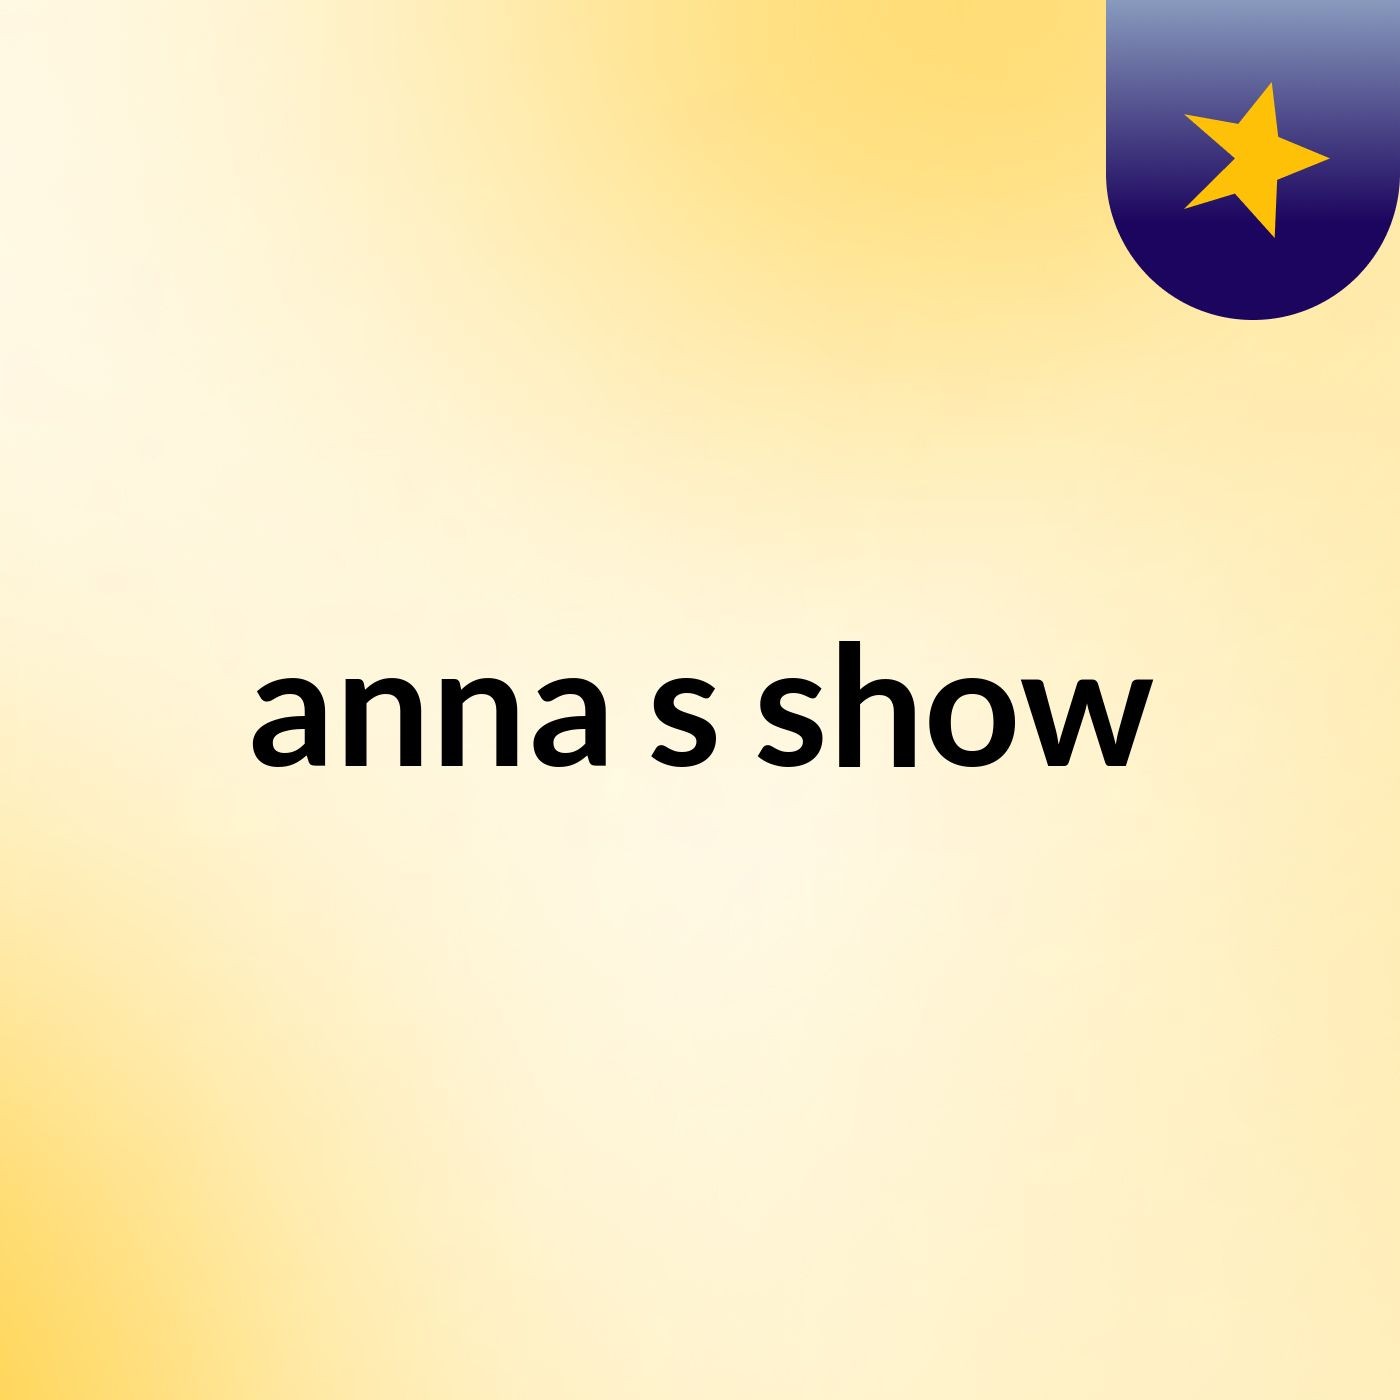 anna's show